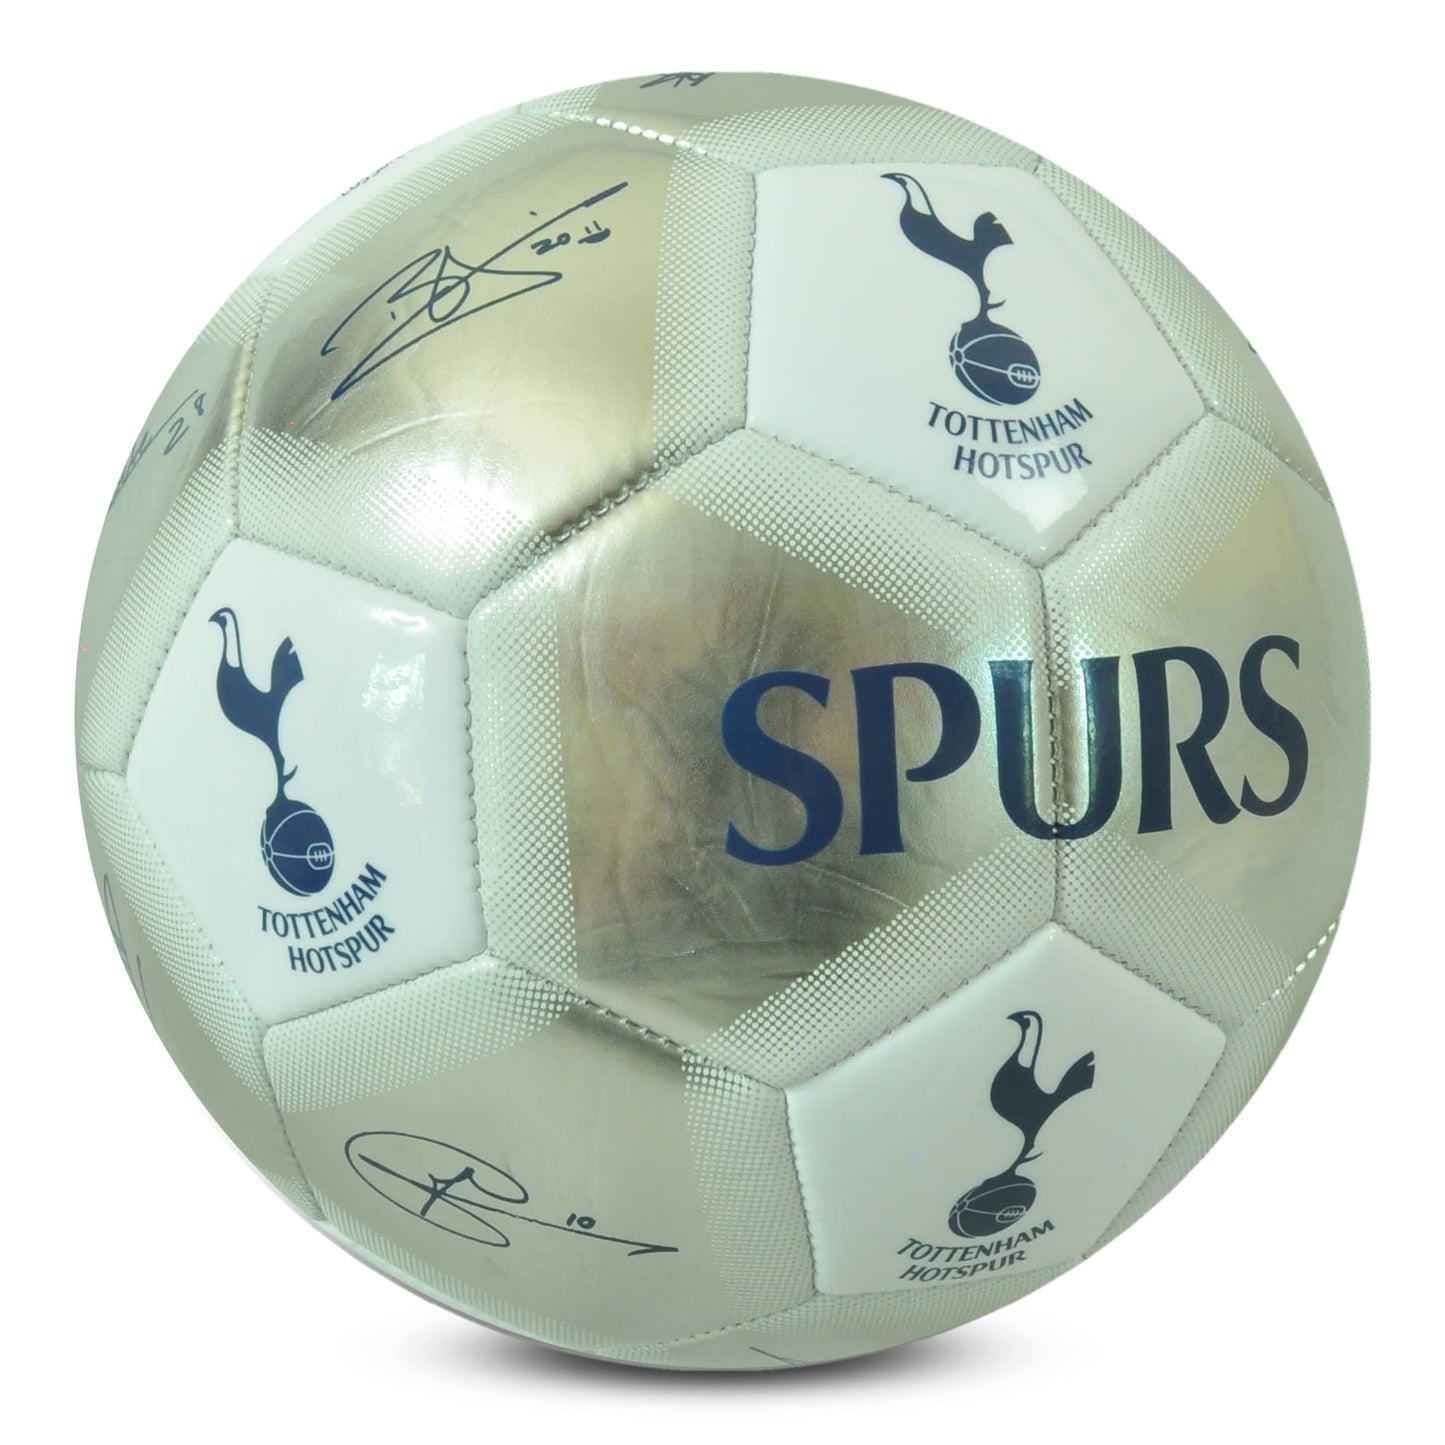 Tottenham Hotspur Special Edition Silver Signature Football